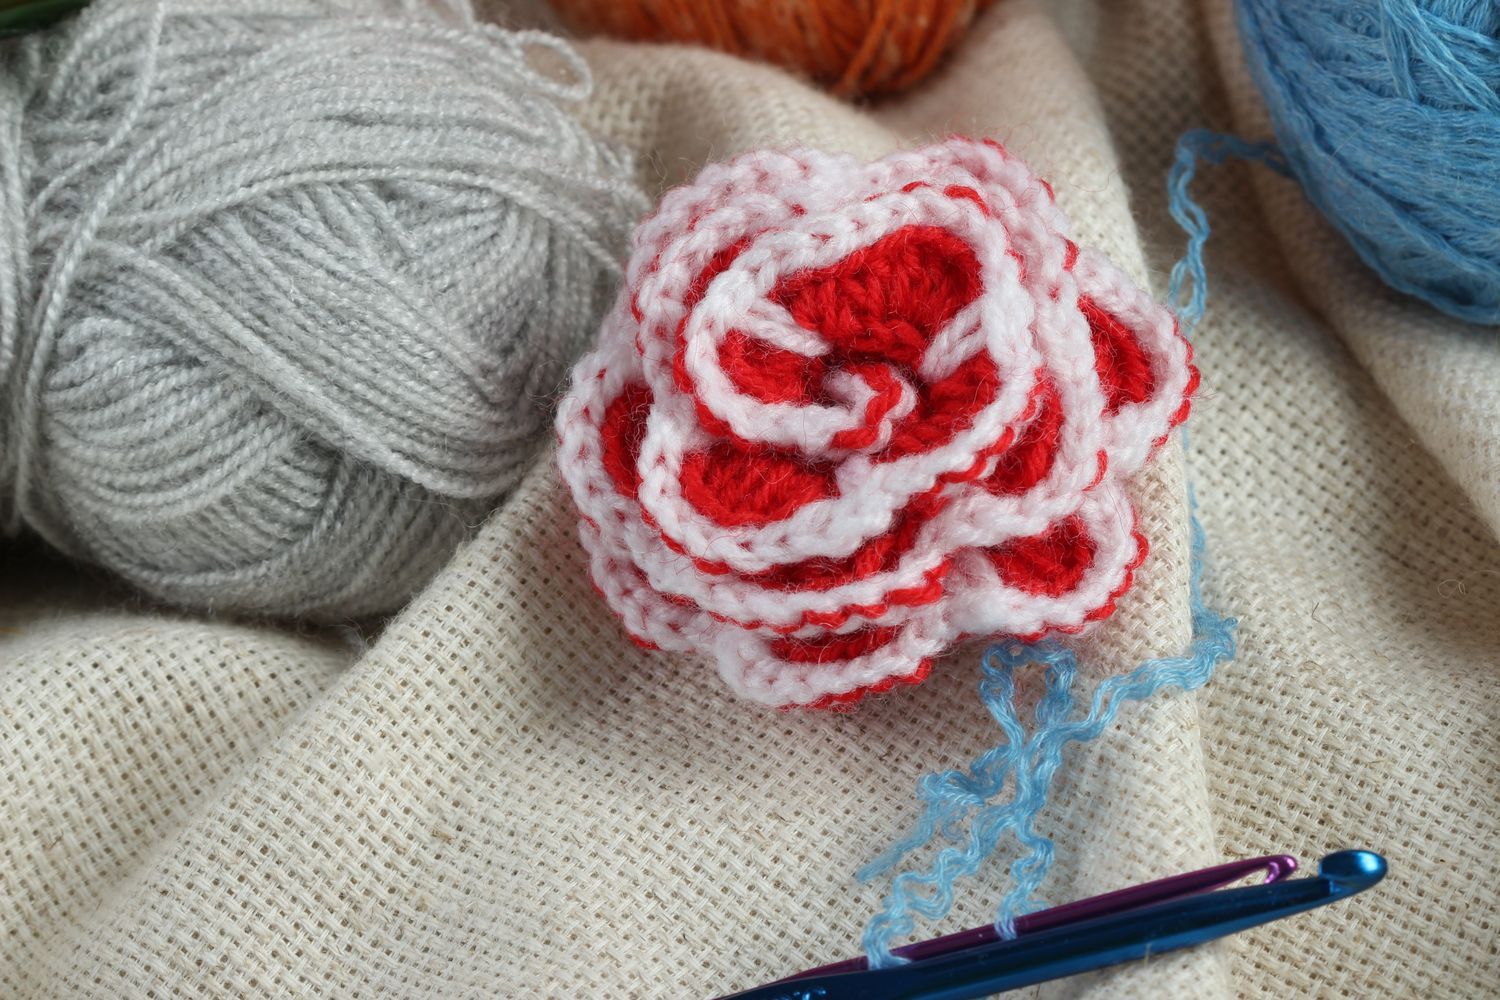 Handmade crocheted flower crochet roses decorative flower jewelry supplies photo 1